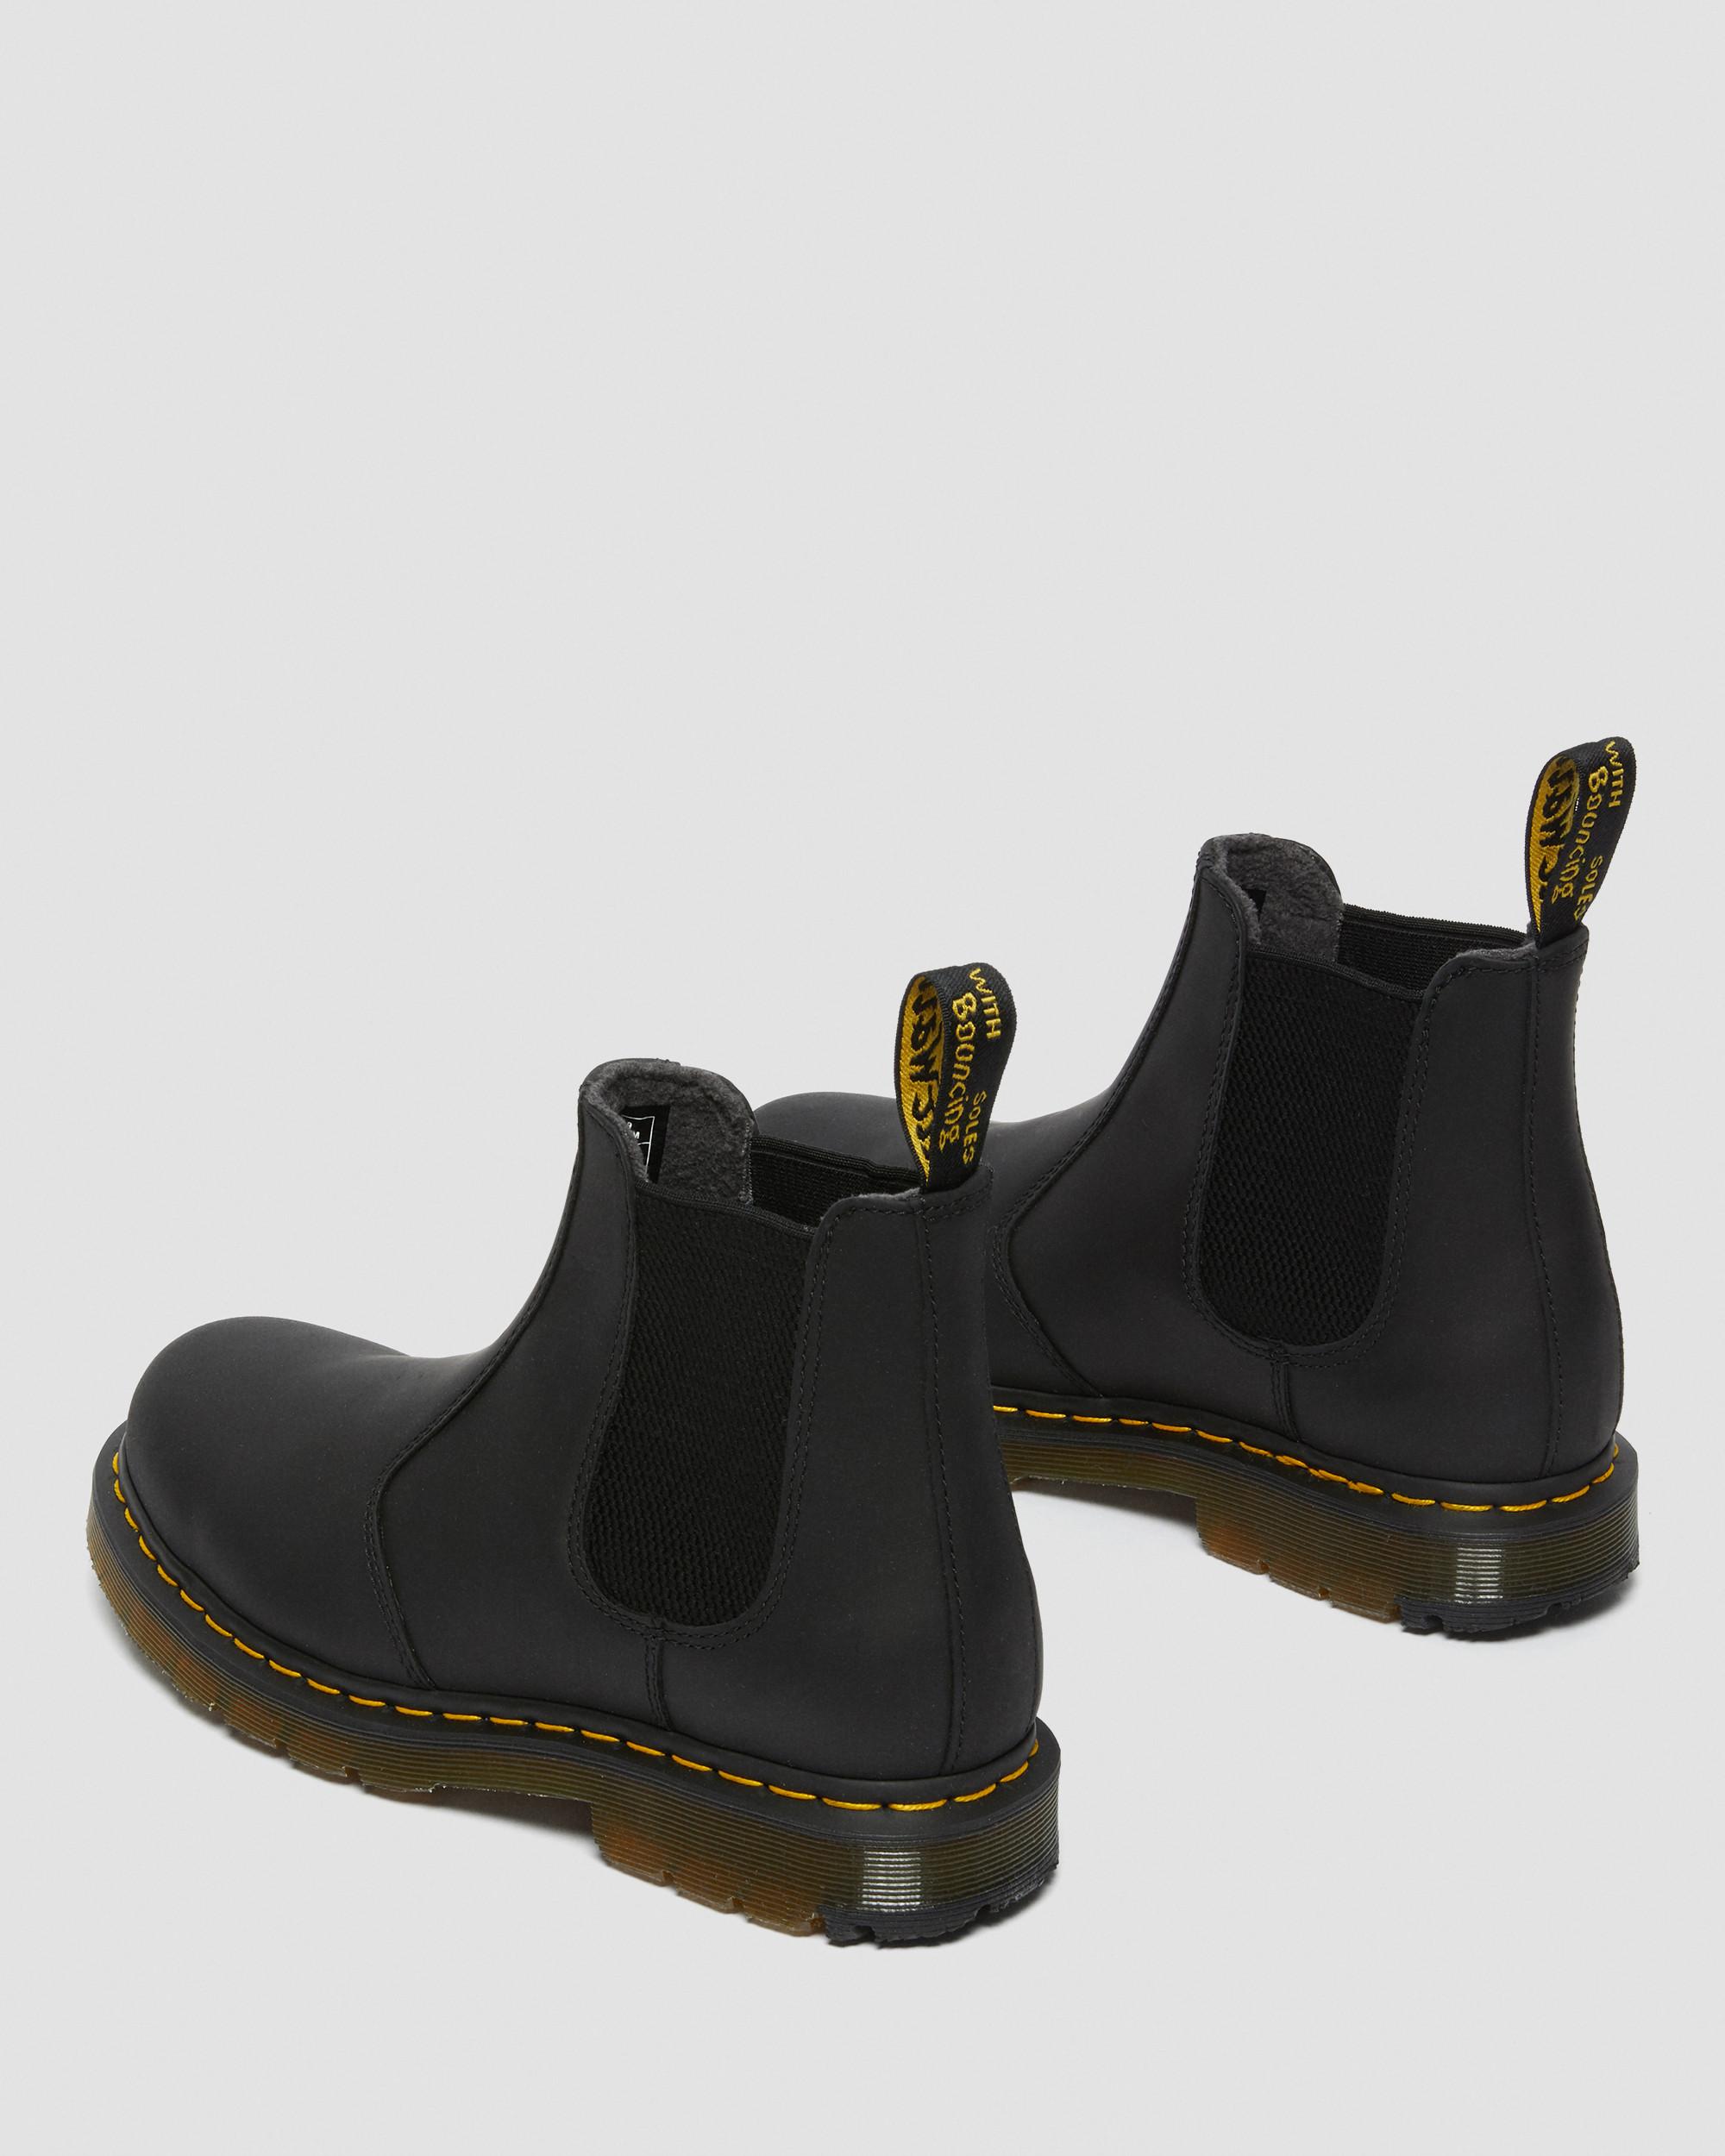 2976 DM's Wintergrip Chelsea Boots in Black